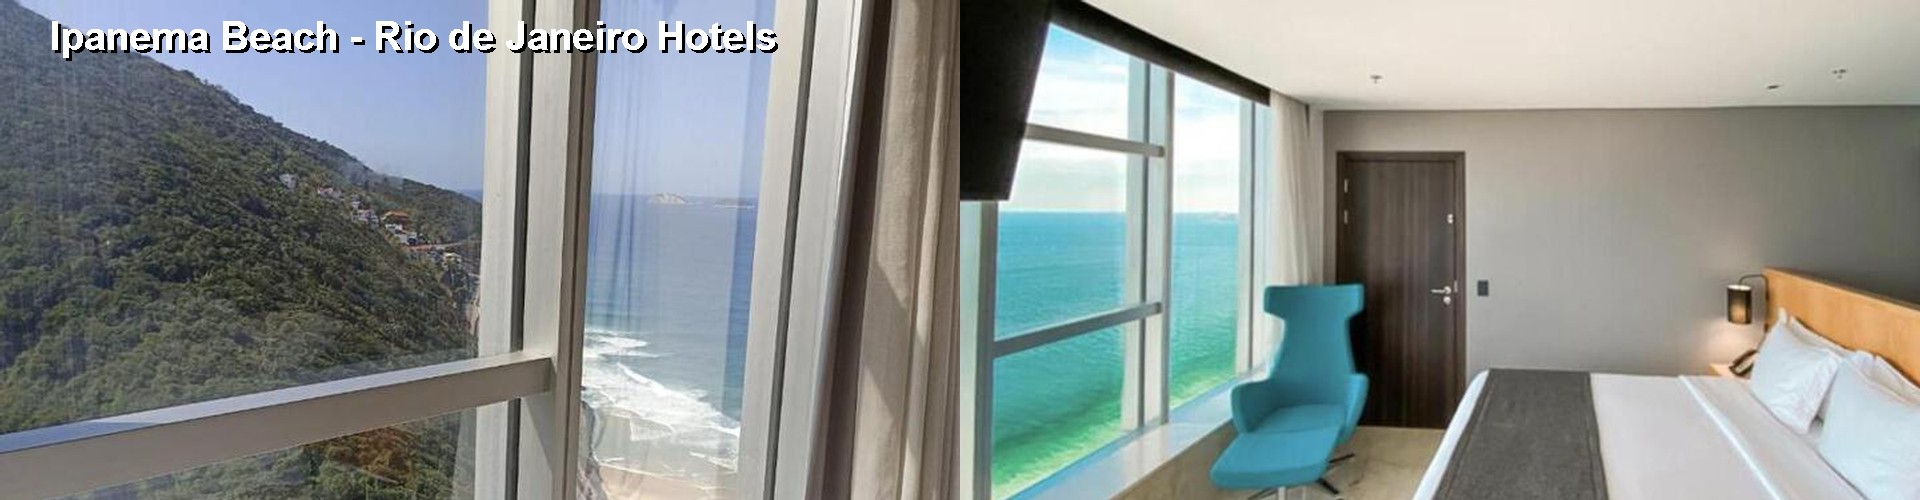 5 Best Hotels near Ipanema Beach - Rio de Janeiro